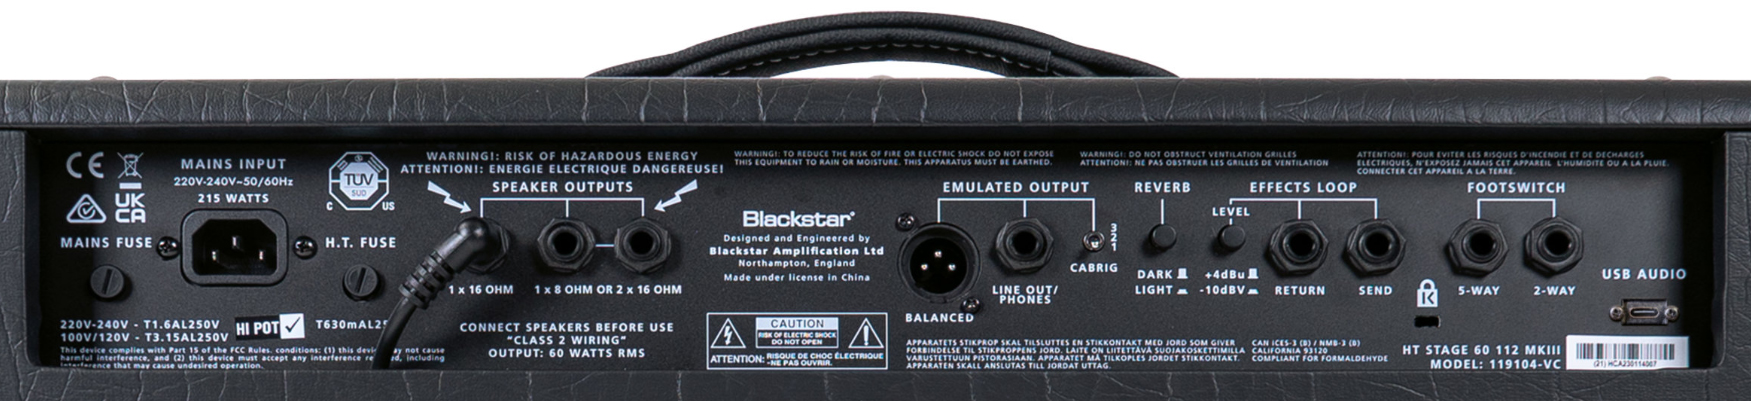 Blackstar Ht Venue Stage 60 112 Mkiii 60w 1x12 El34 - Combo für E-Gitarre - Variation 4